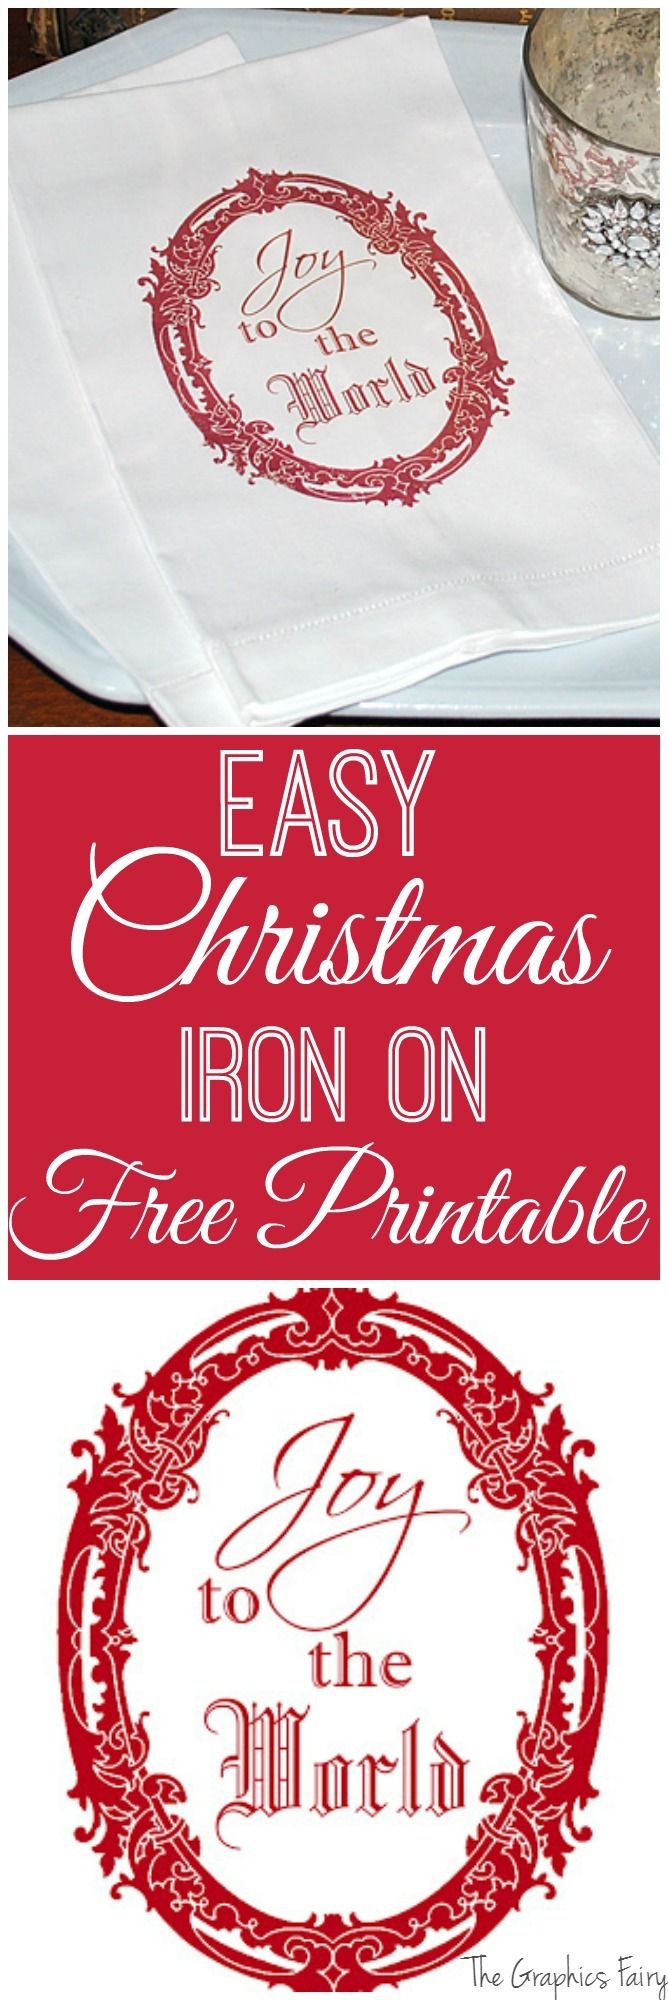 Christmas Iron On Printable - Instant Holiday Art | Patterns - Free Printable Christmas Iron On Transfers